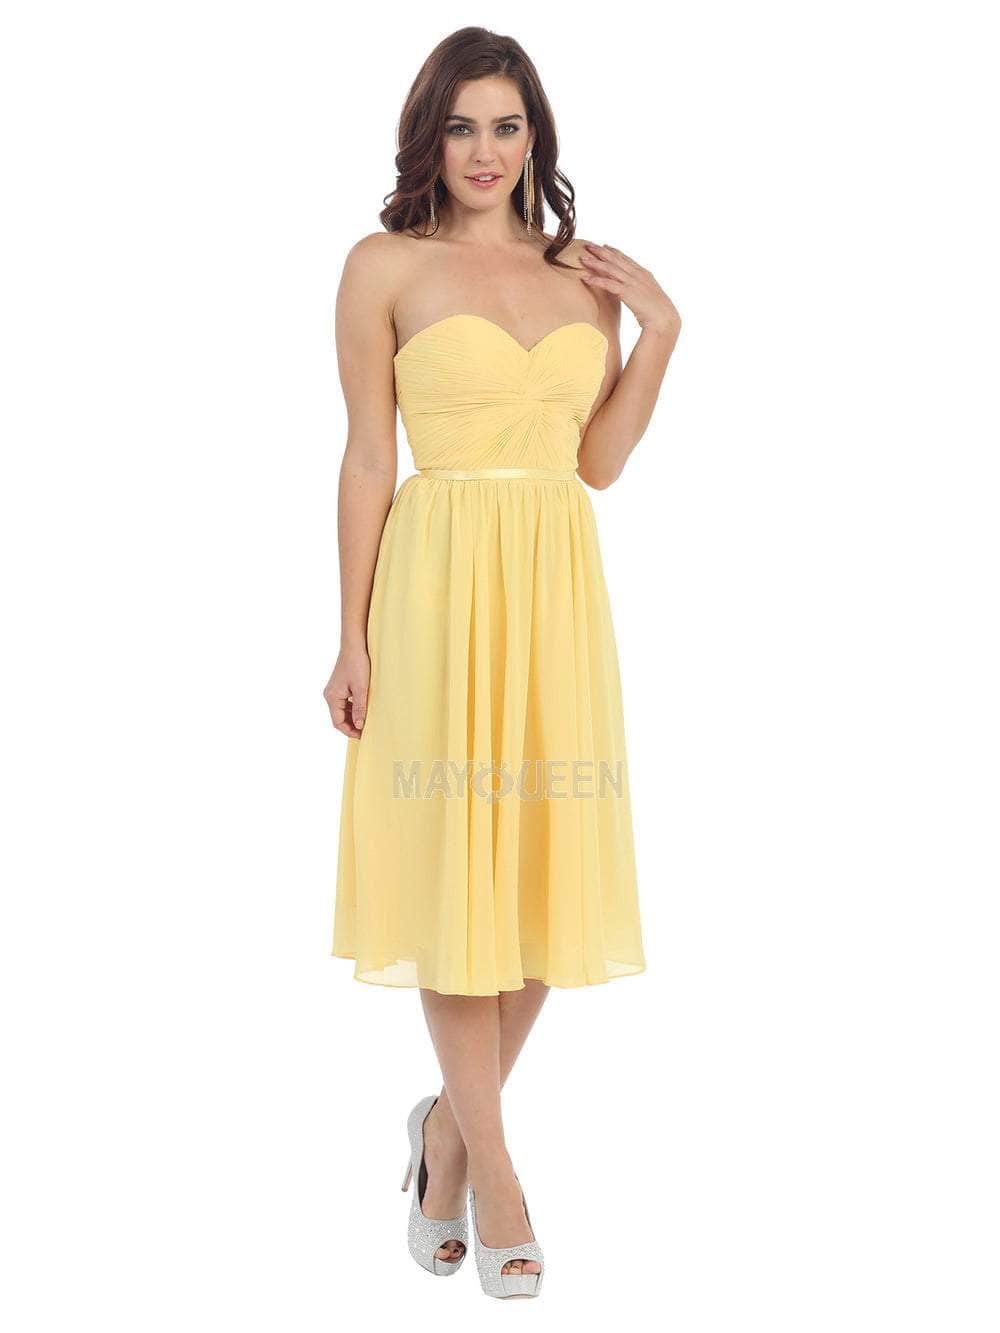 May Queen - MQ1161 Strapless Sweetheart A-Line Tea-Length Dress